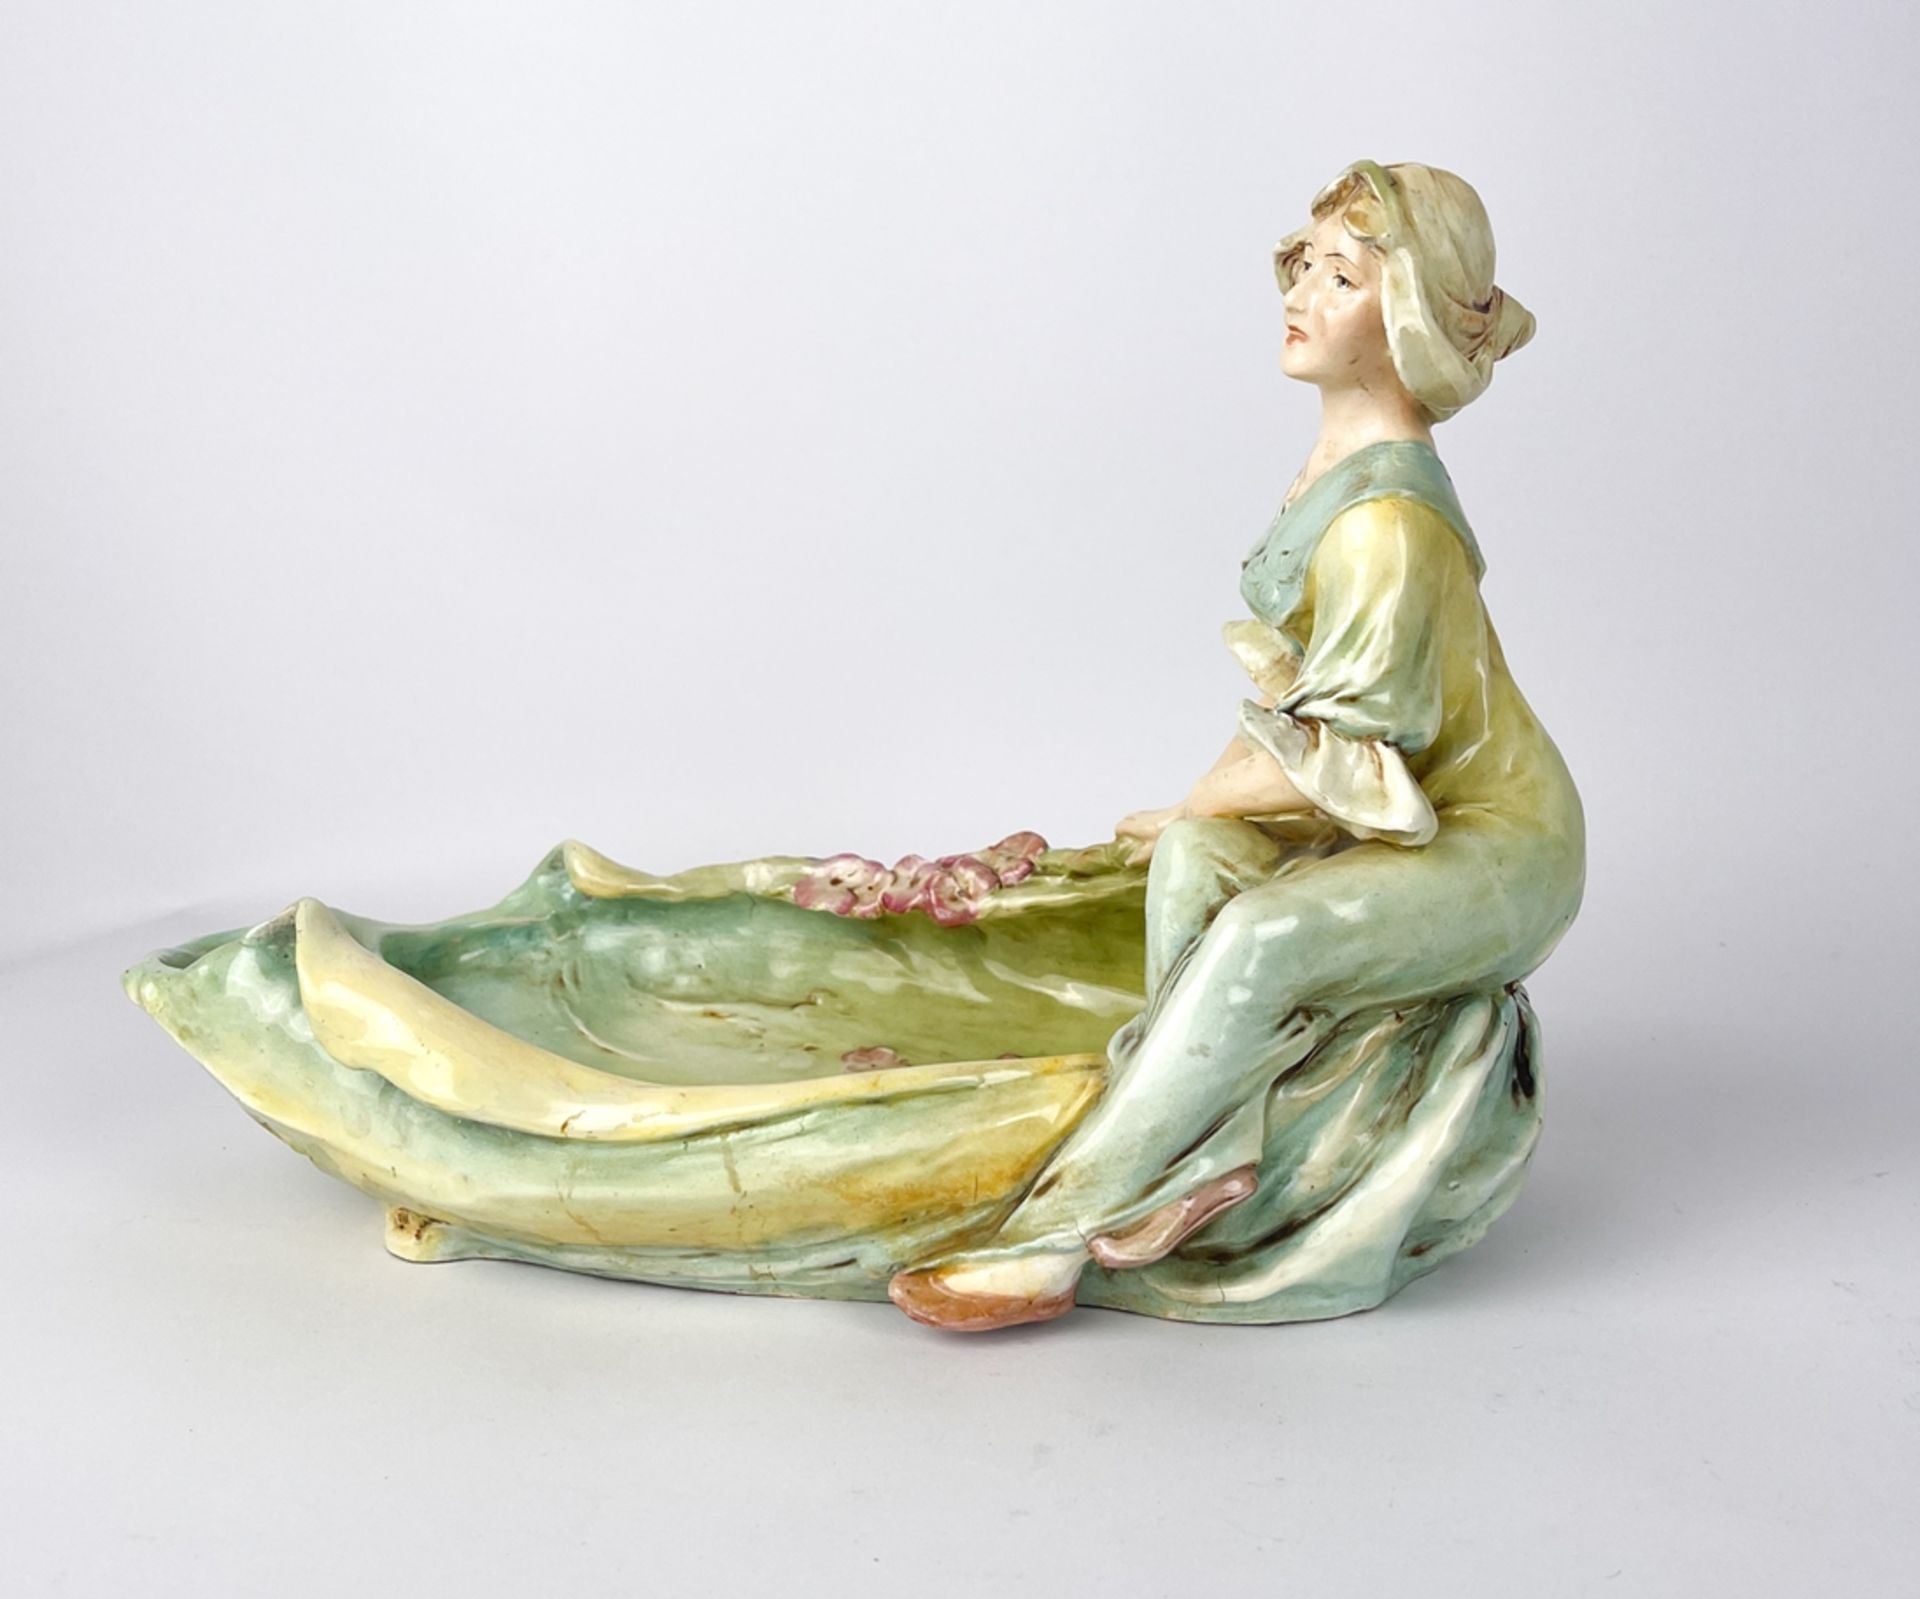 Jugendstil Kermaikschale "Sitzende Frau" - Bild 10 aus 21